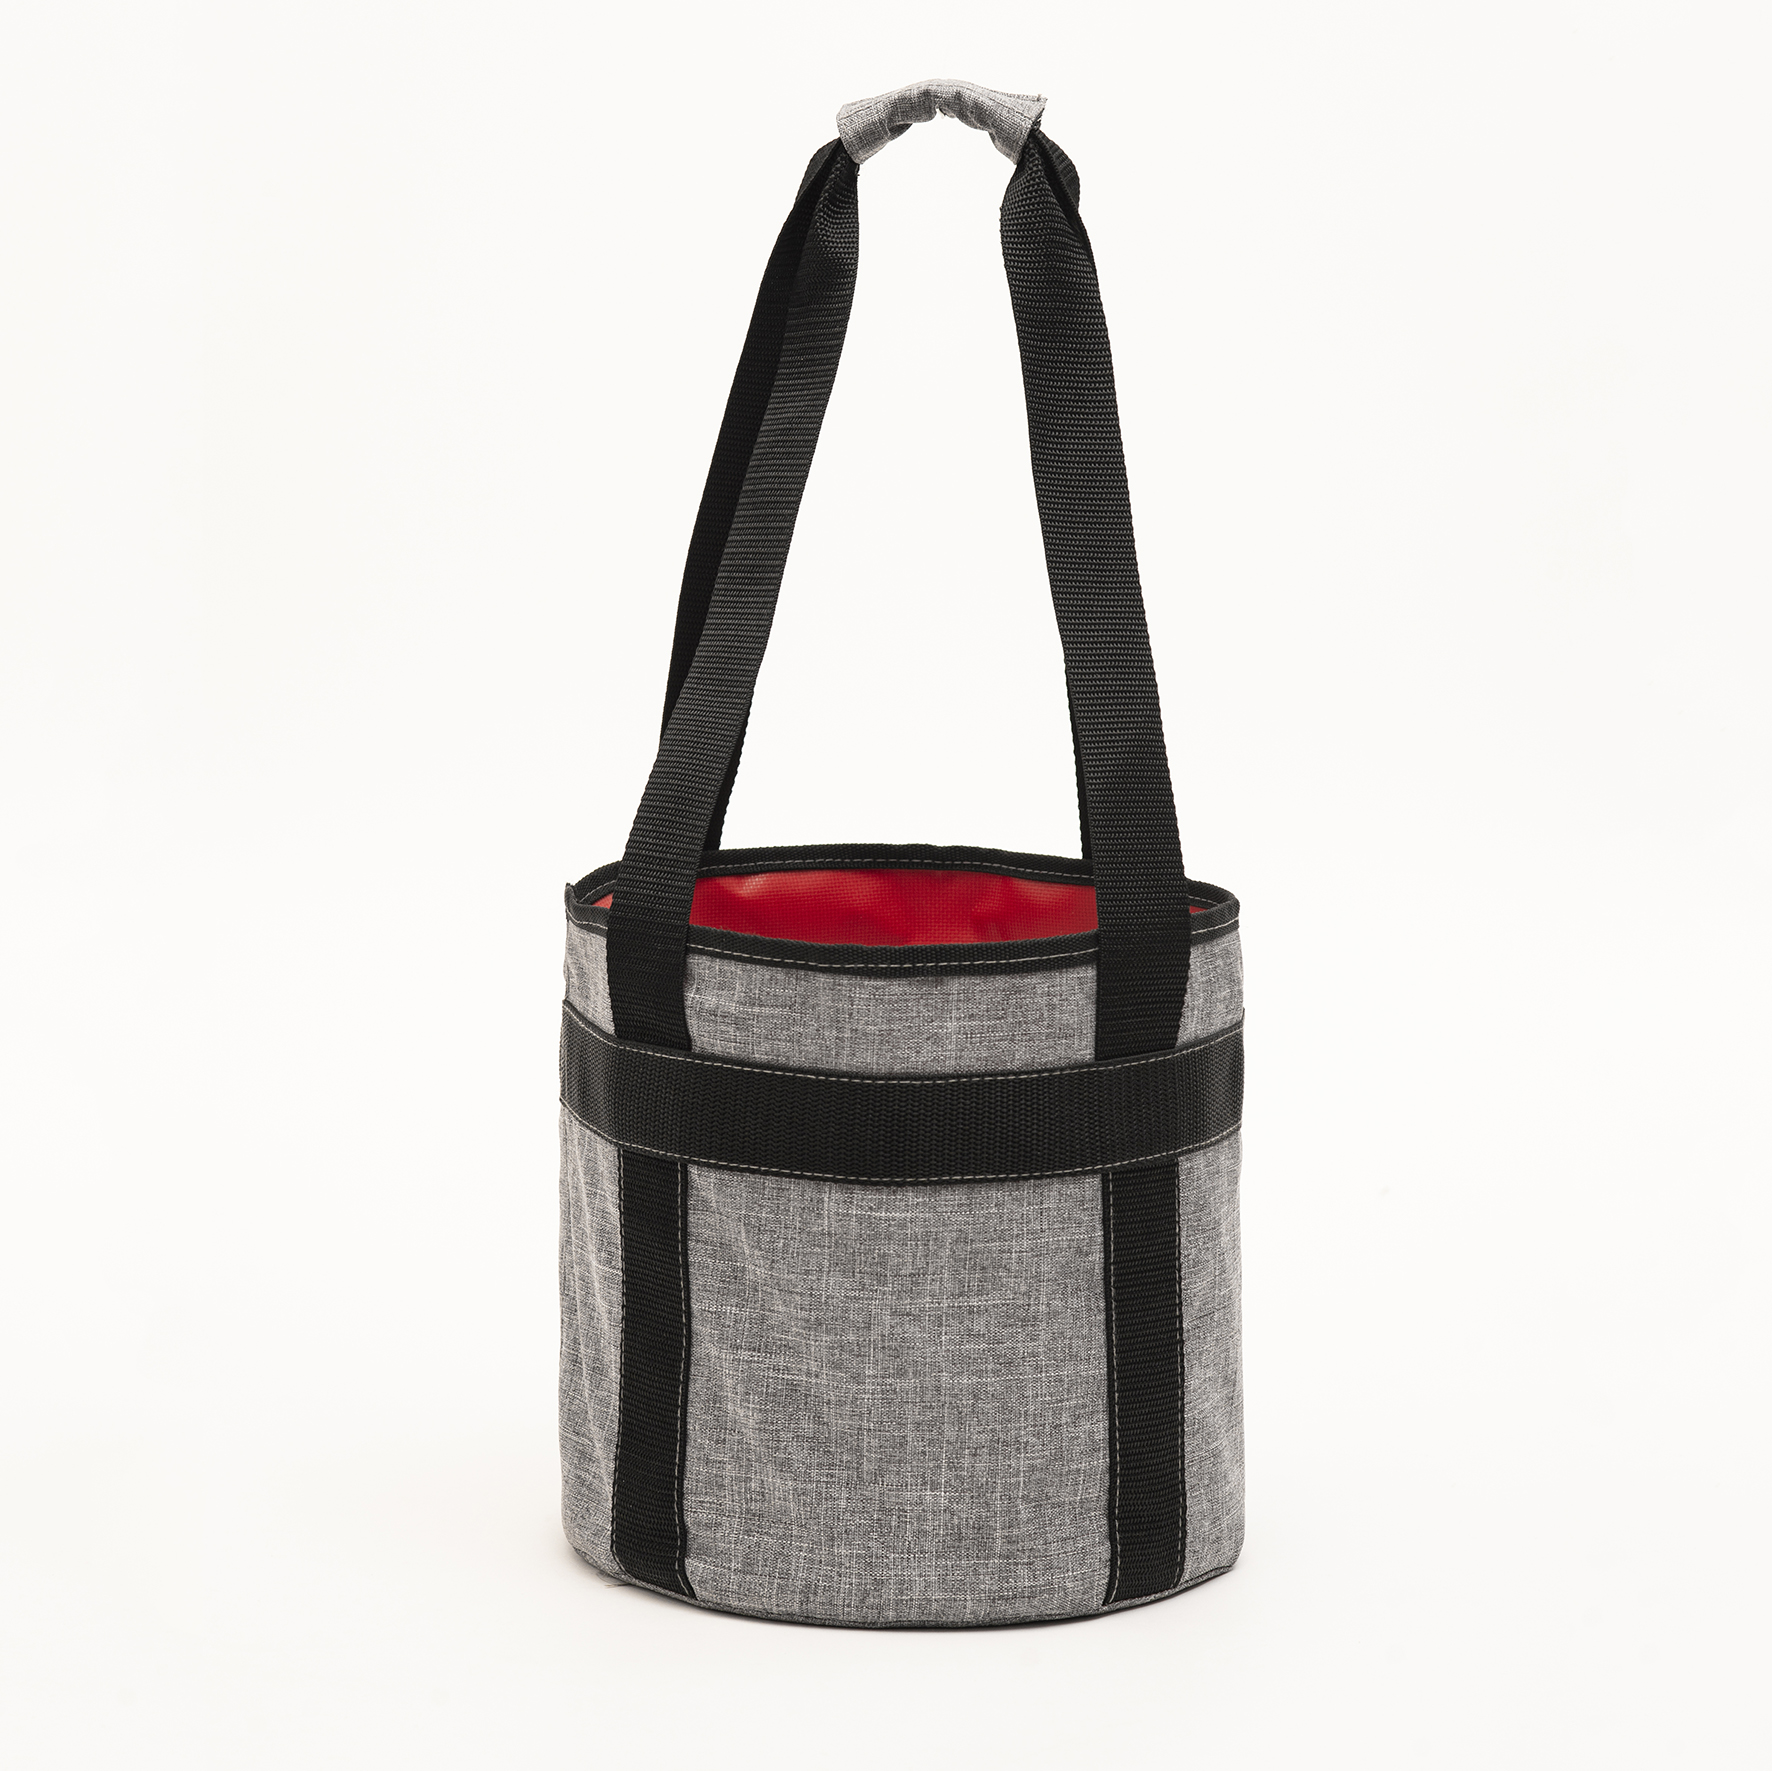 Best-Selling Multicolor Gym Sports Bag Women - New design fashion tote beach bag waterproof bag – Twinkling Star